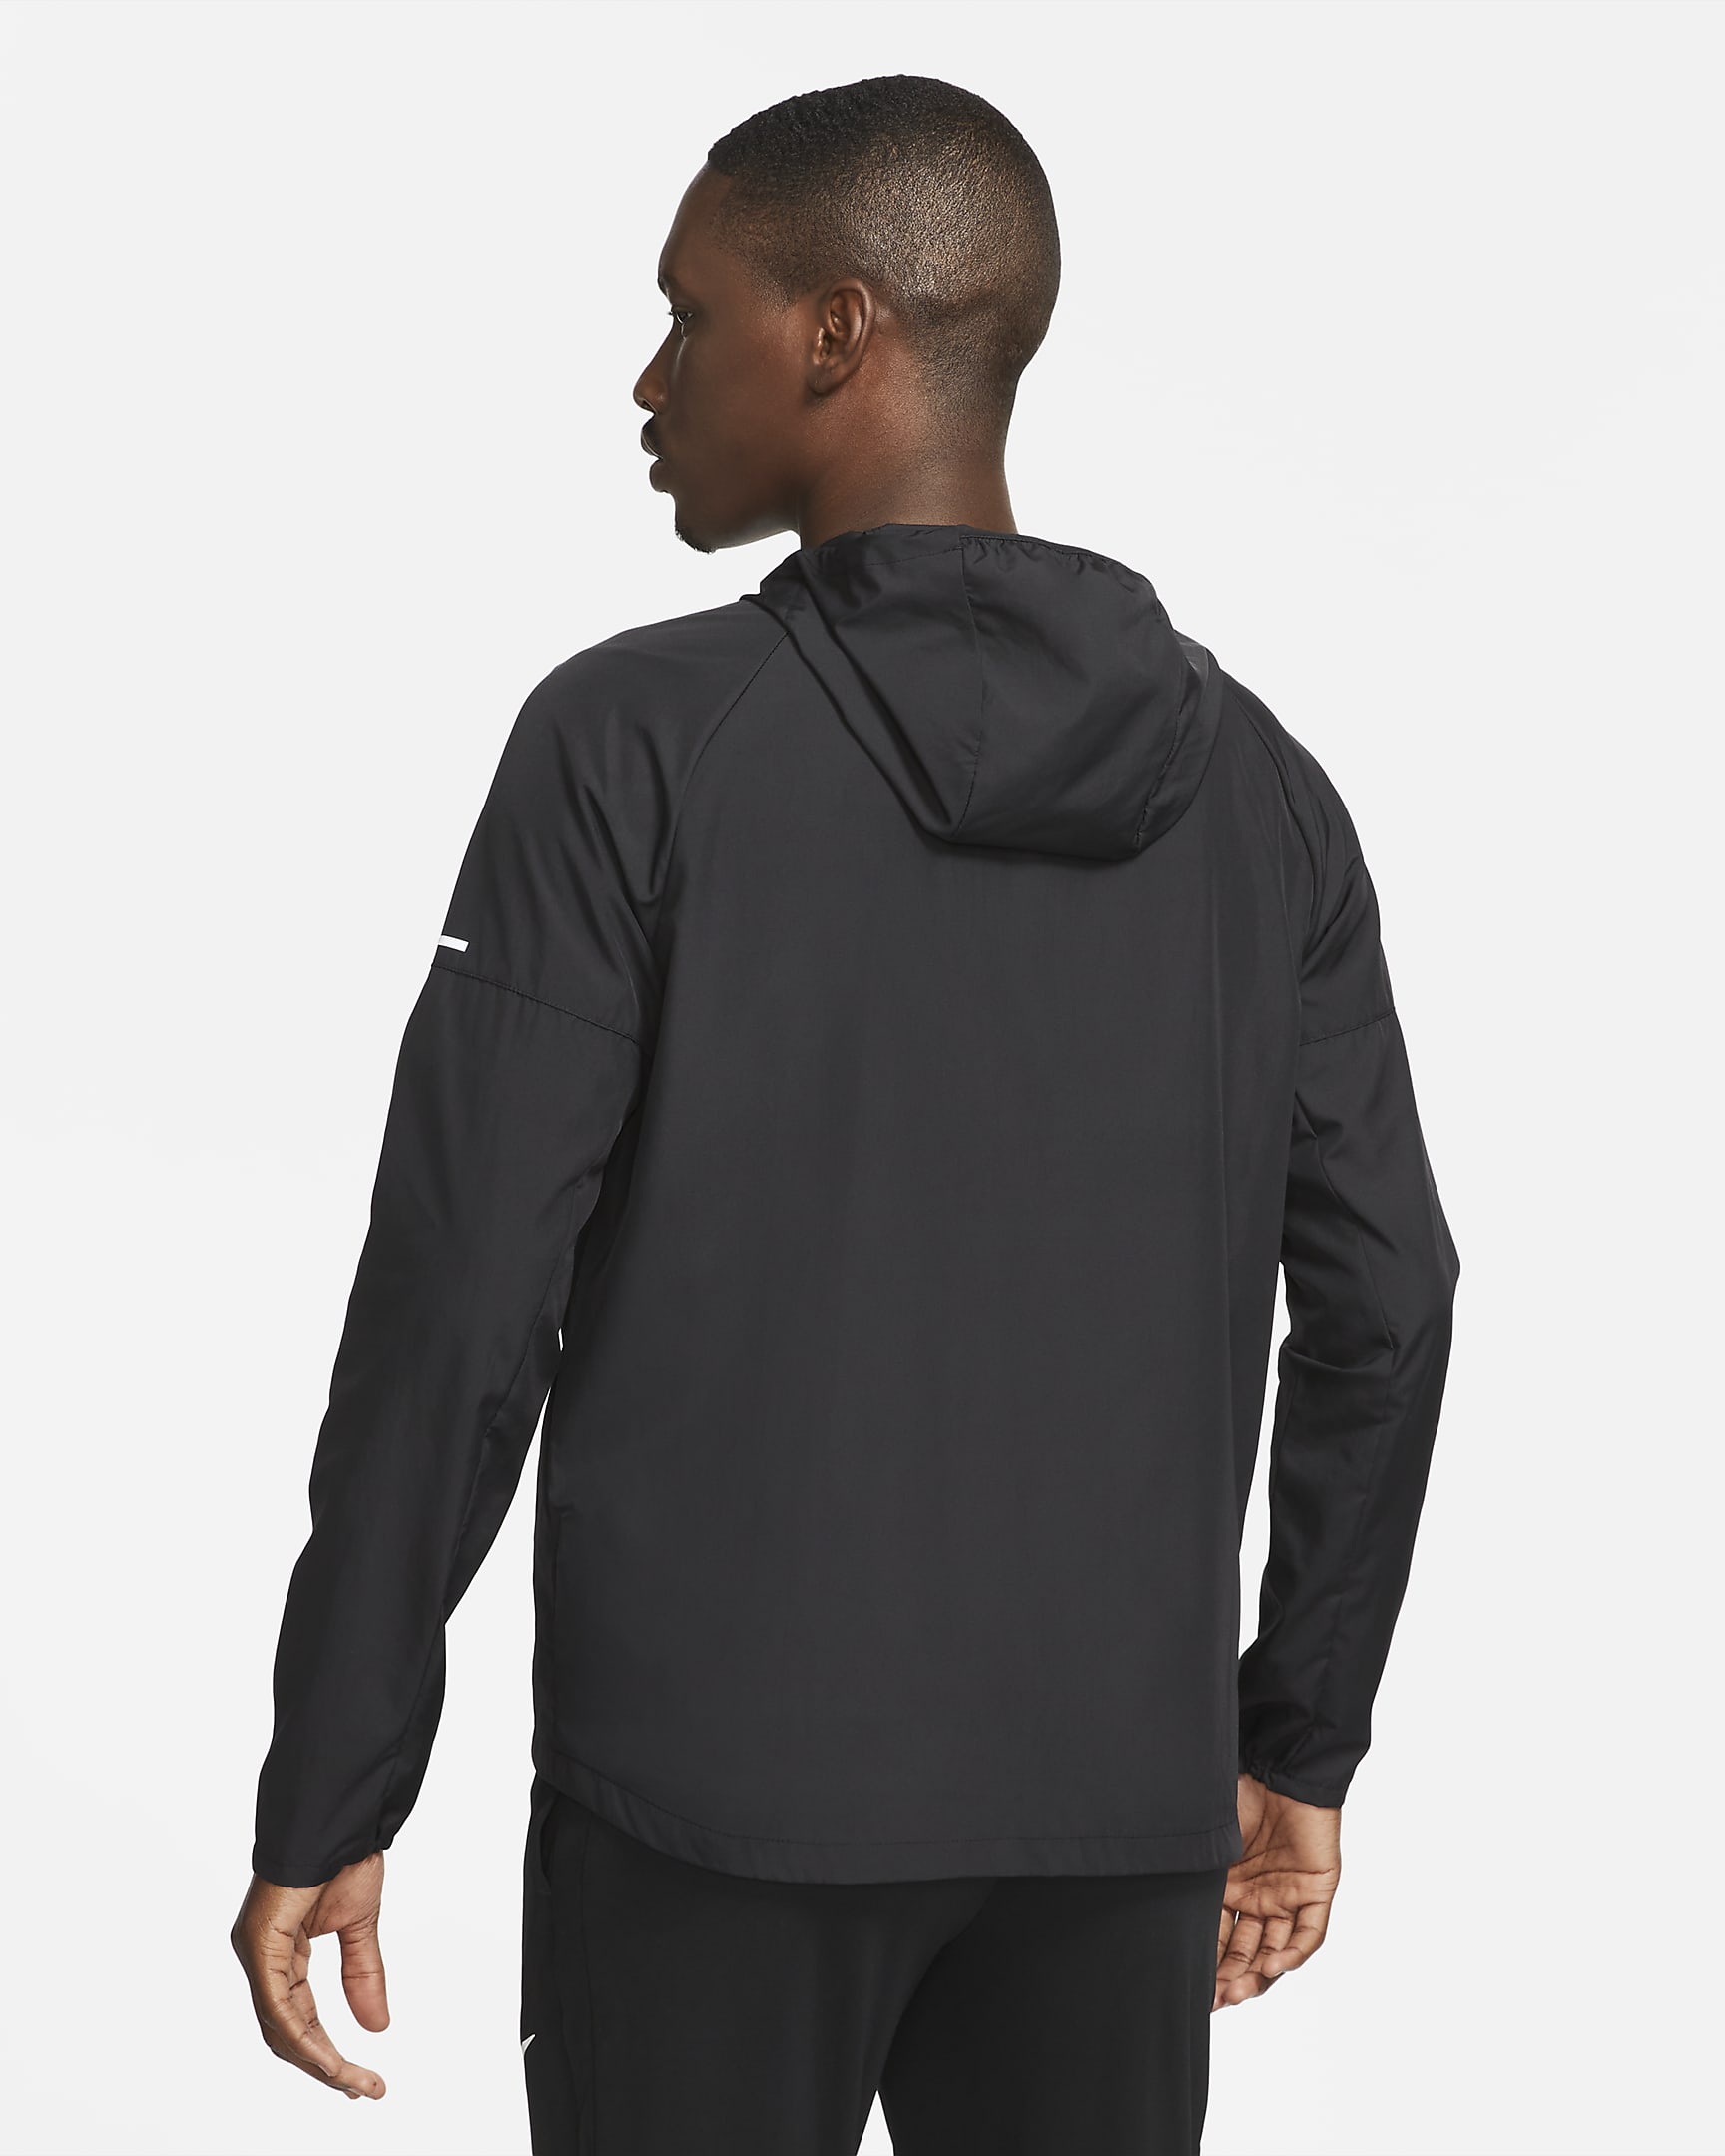 Nike Miler Men's Repel Running Jacket - Black/Black